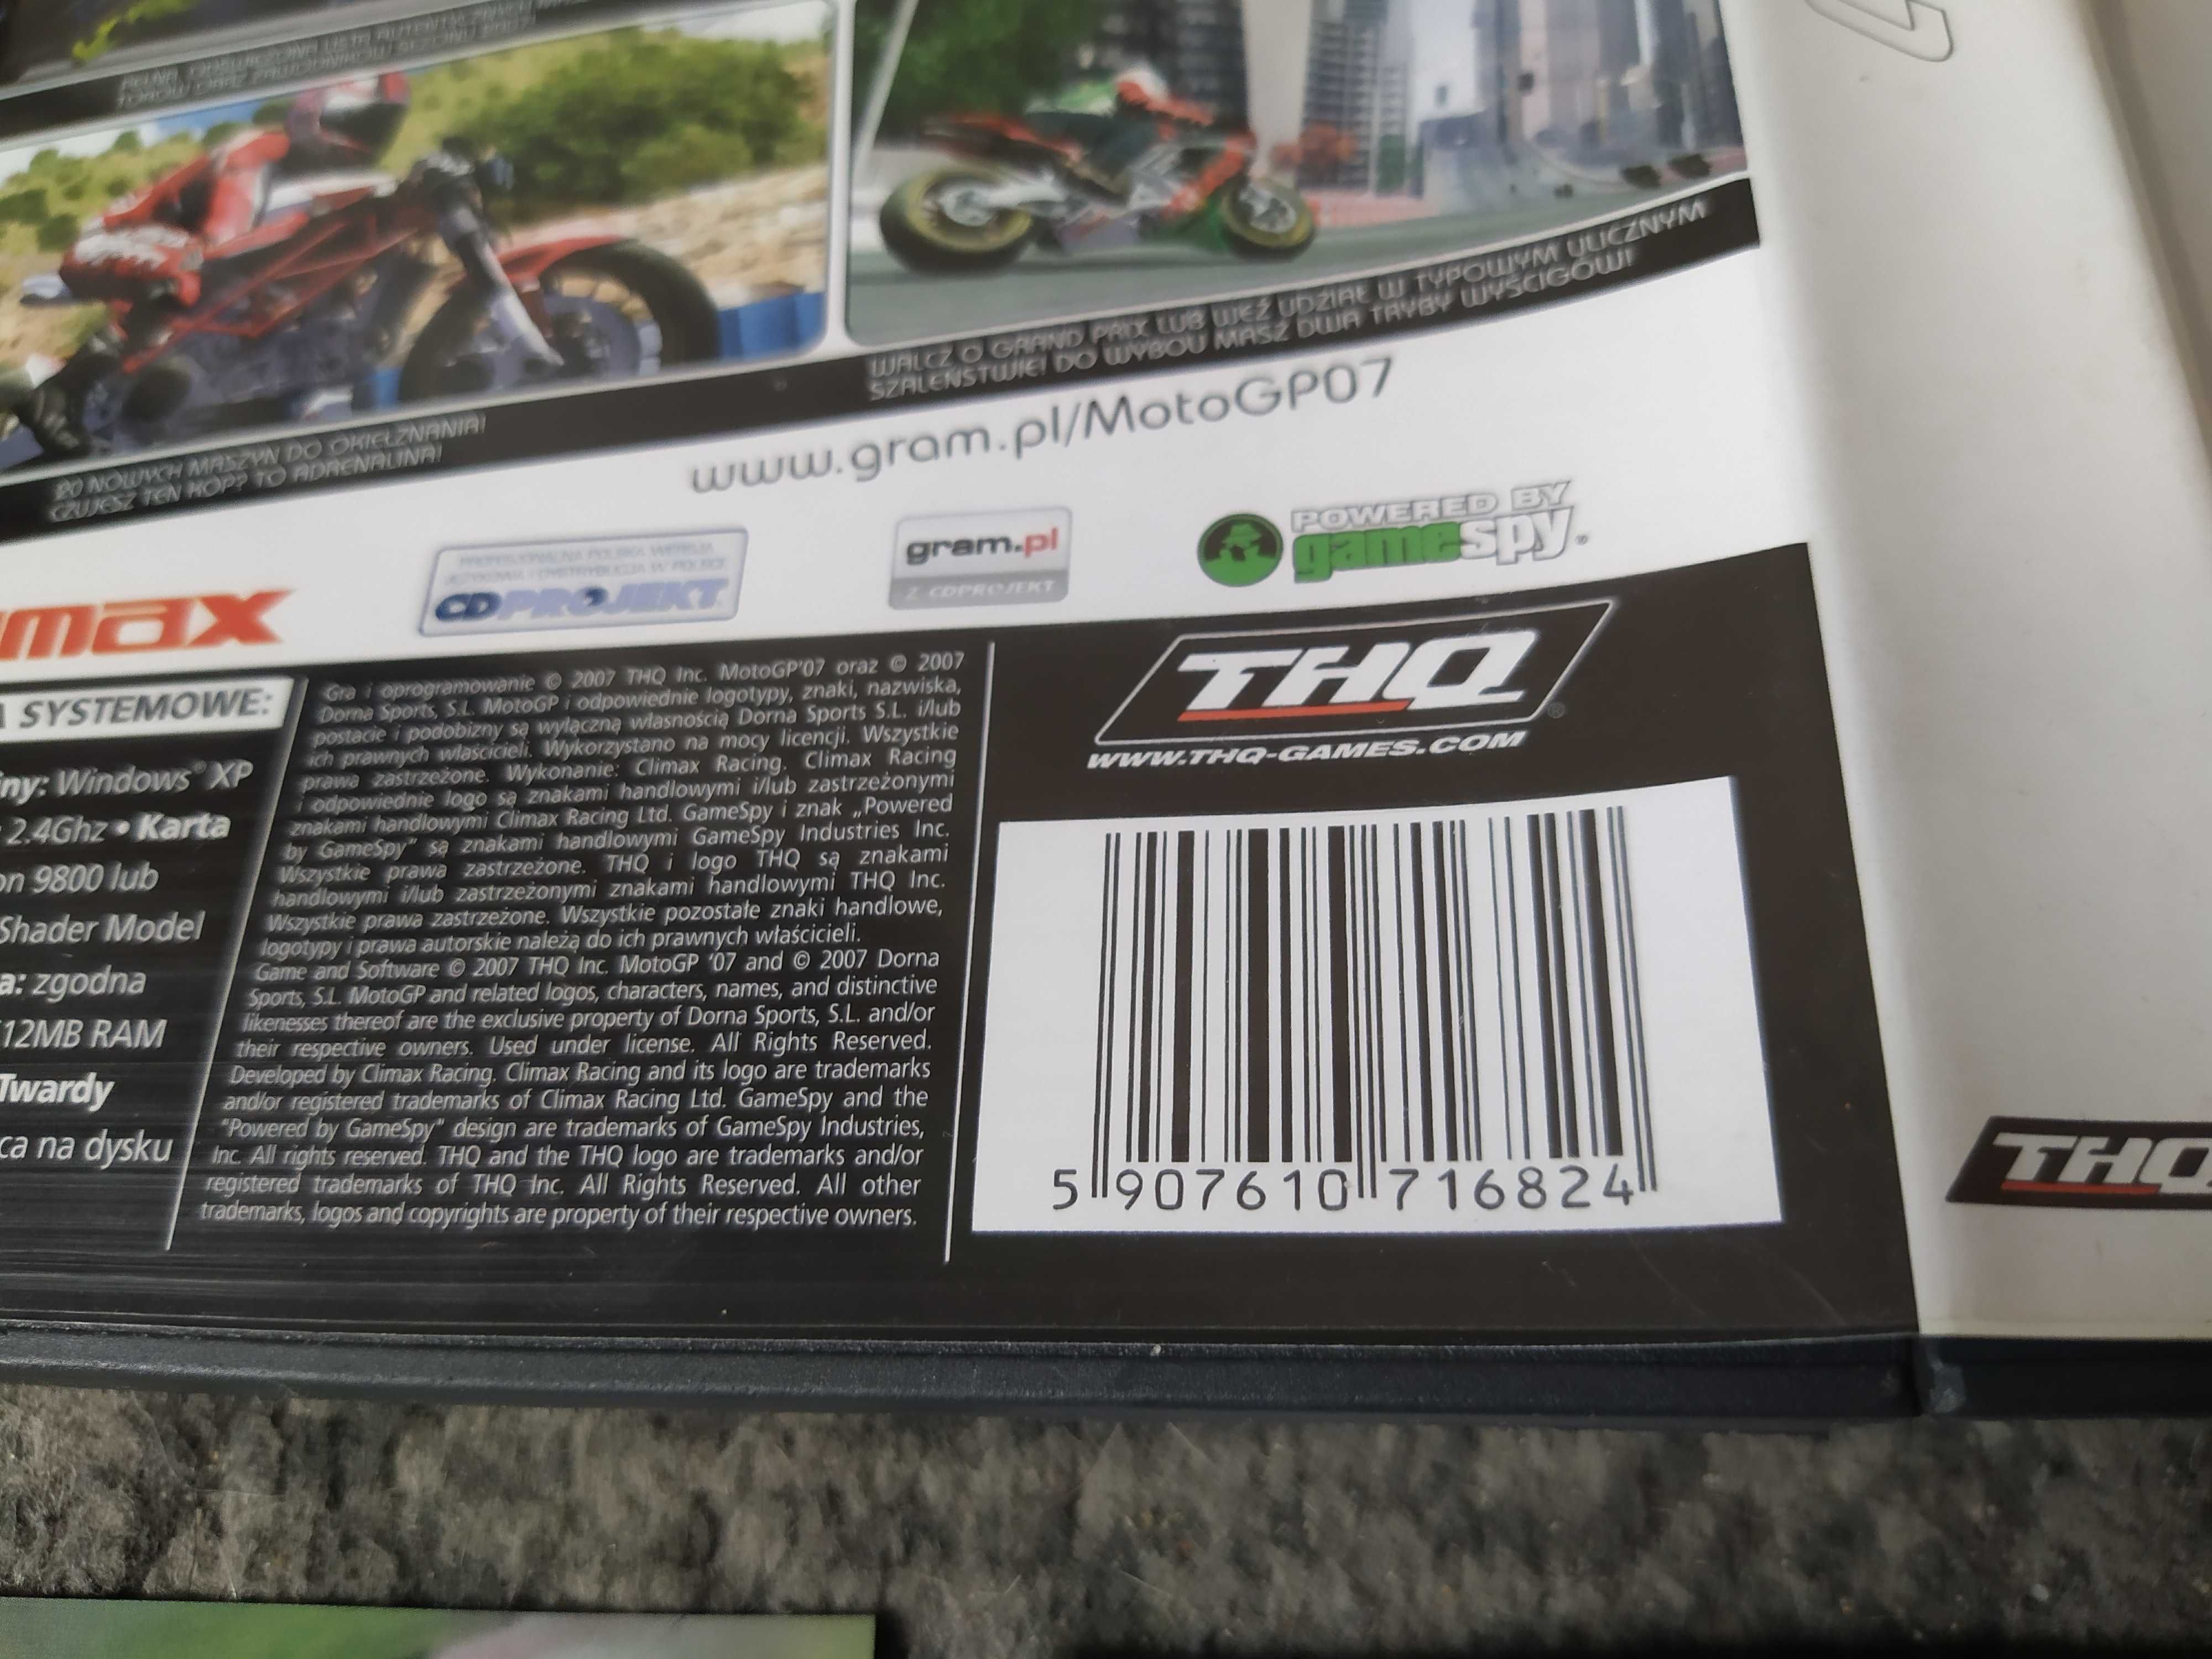 MotoGP’07 PC DVD